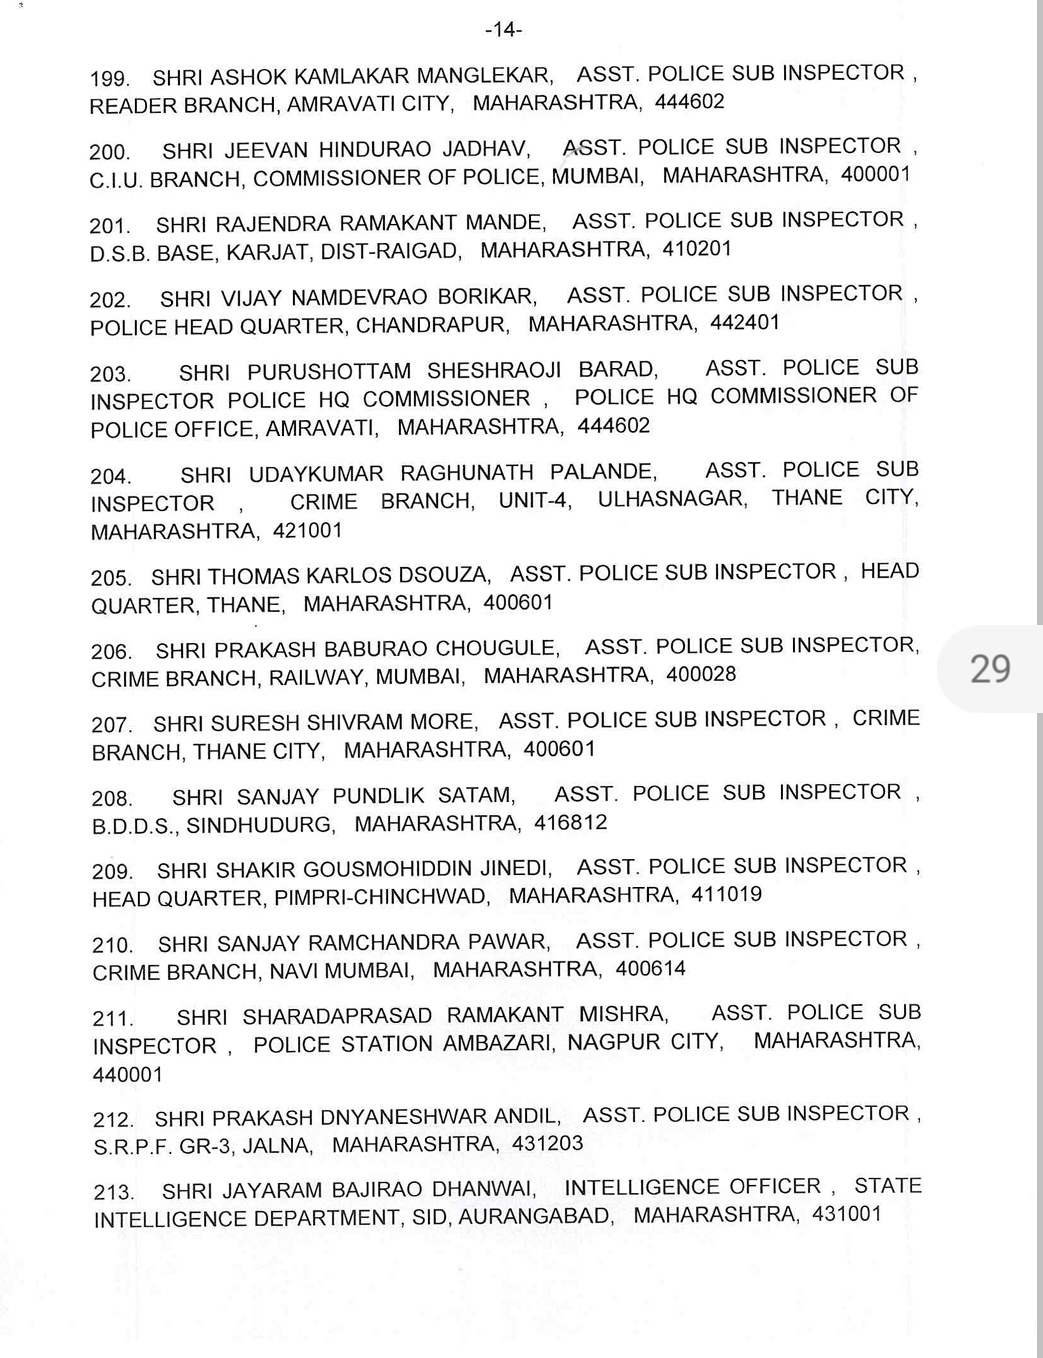 President's Police Medal announced for 40 policemen in Maharashtra